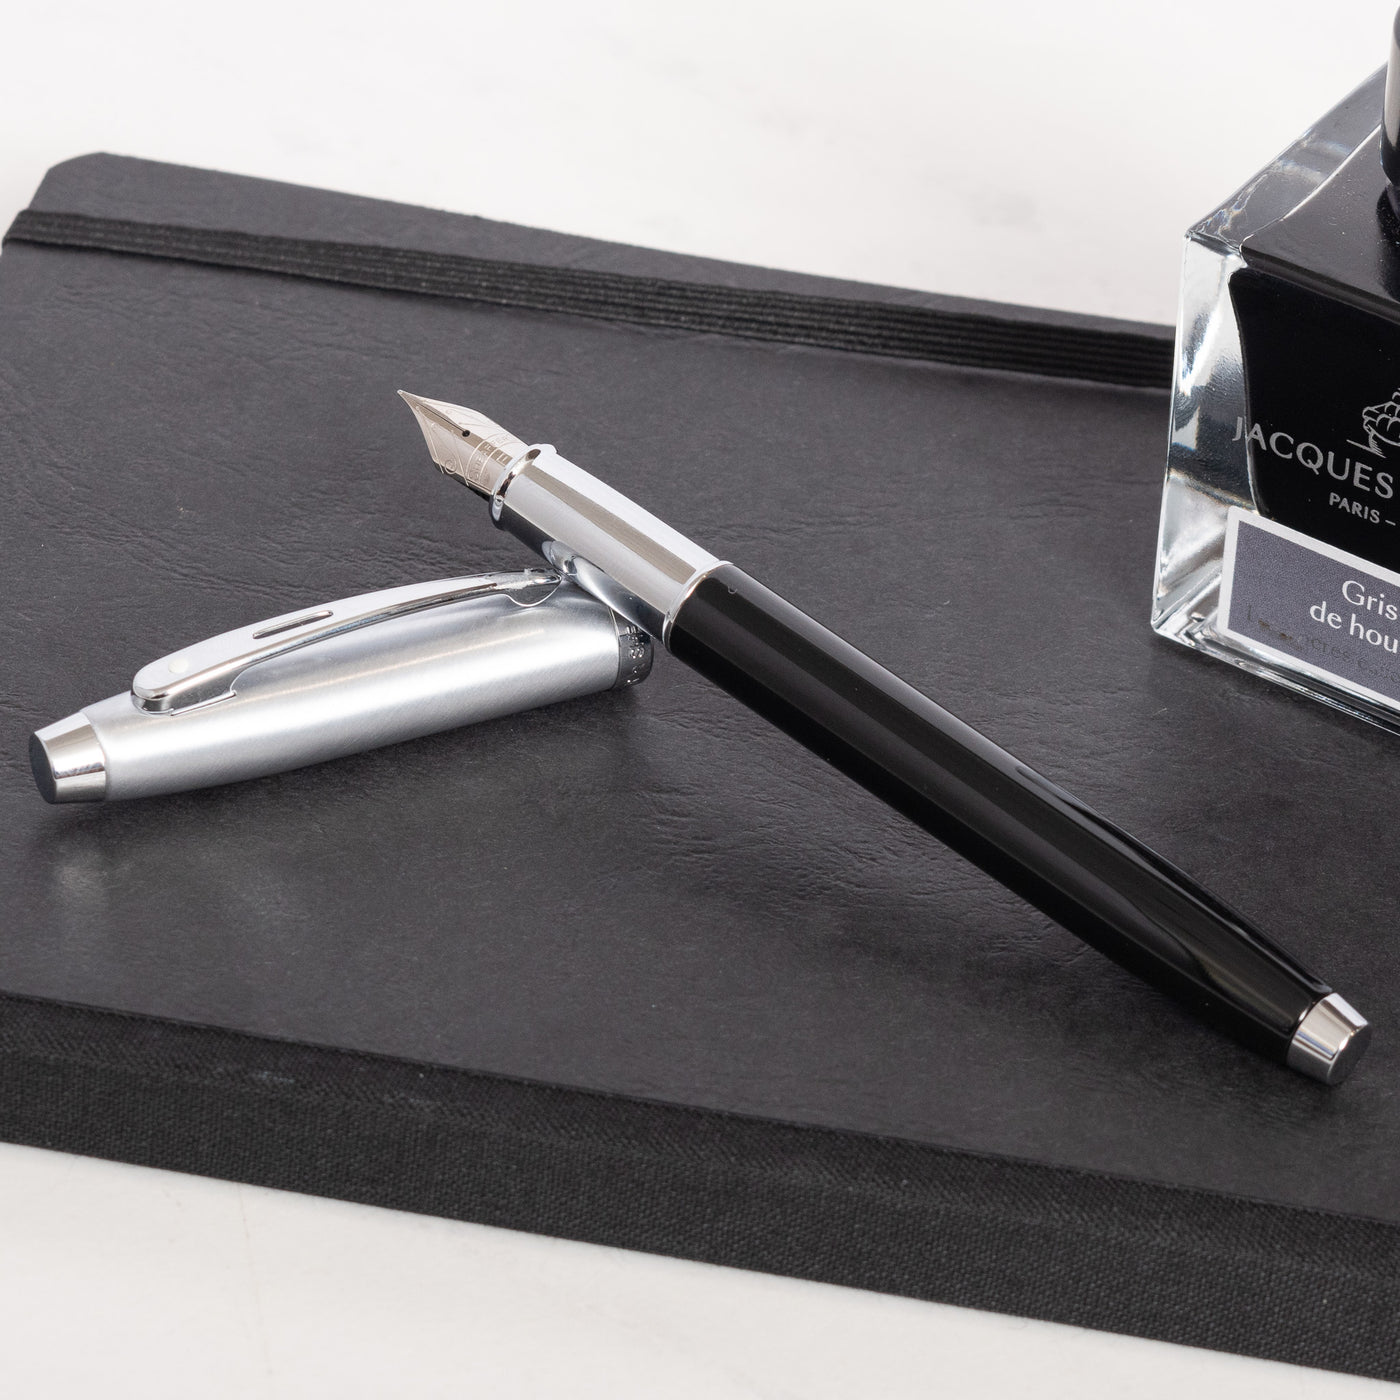 Sheaffer 100 Fountain Pen - Black with Brushed Chrome Cap silver trim